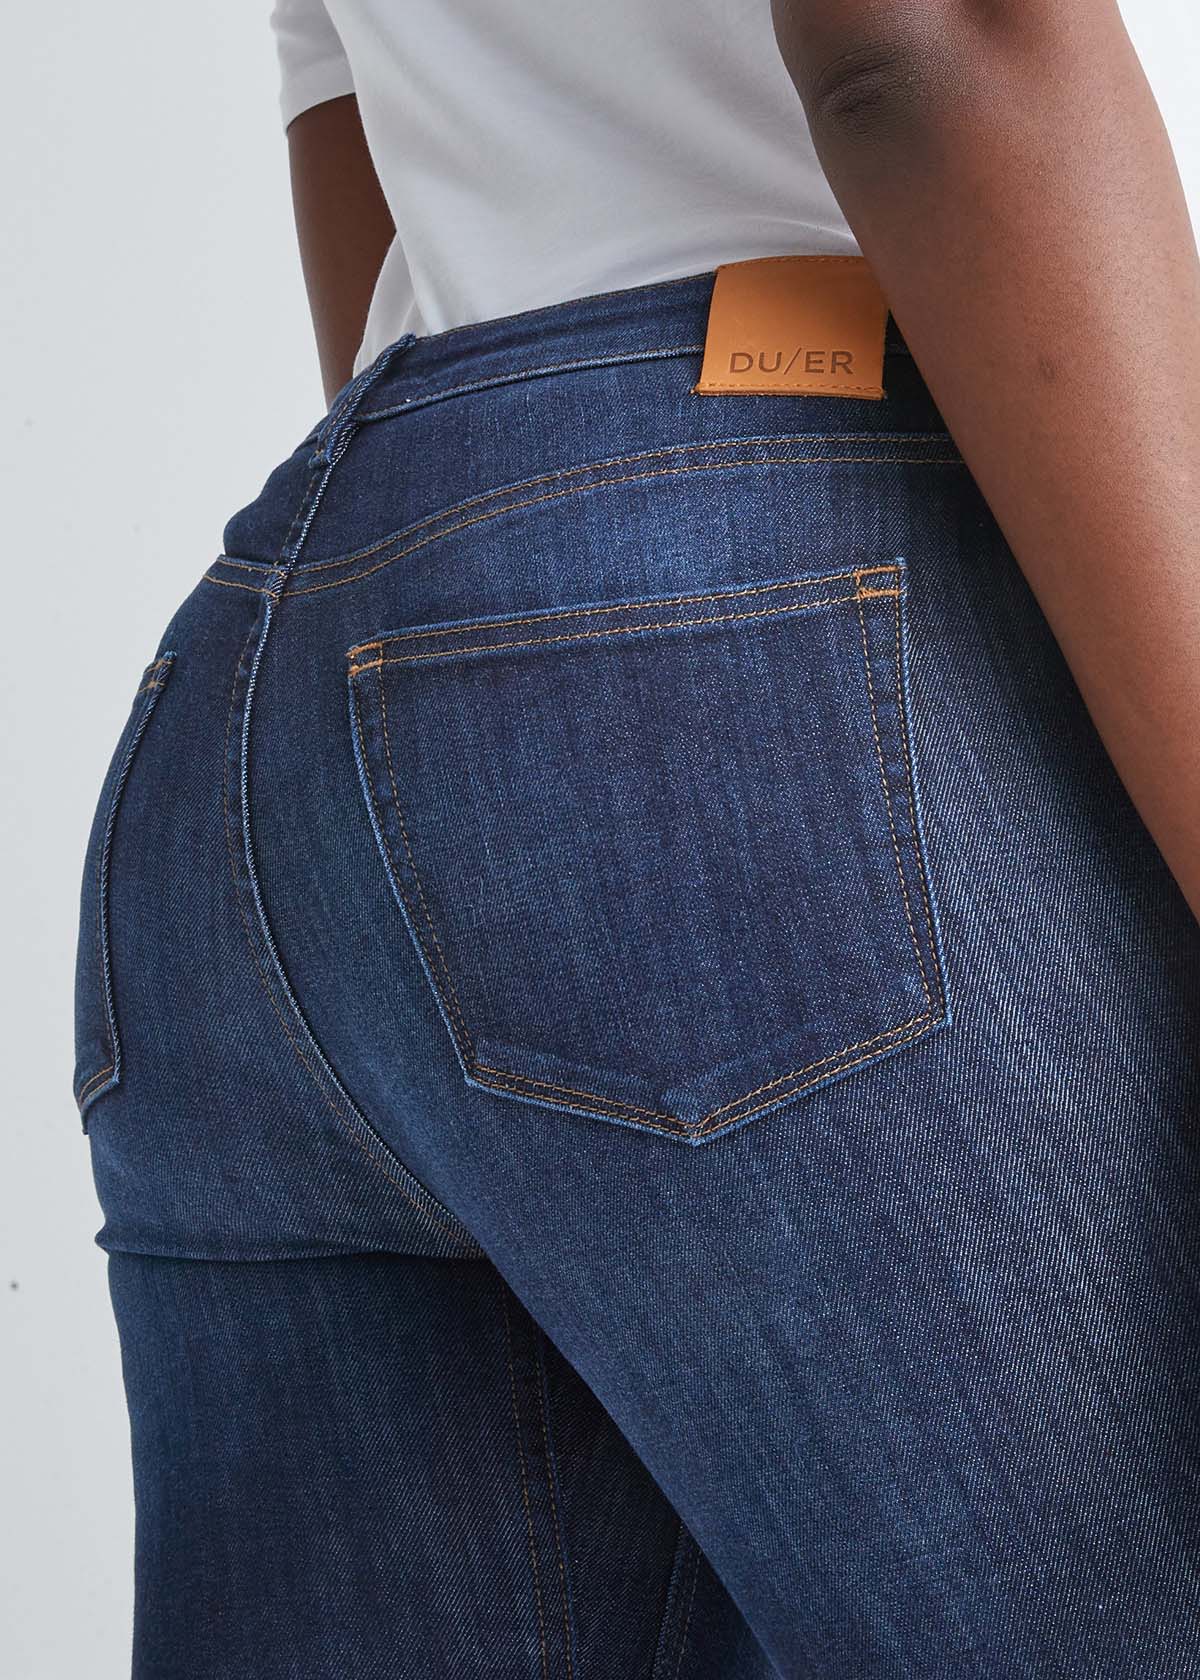 Women's Slim Straight dark blue stretch jeans back pocket